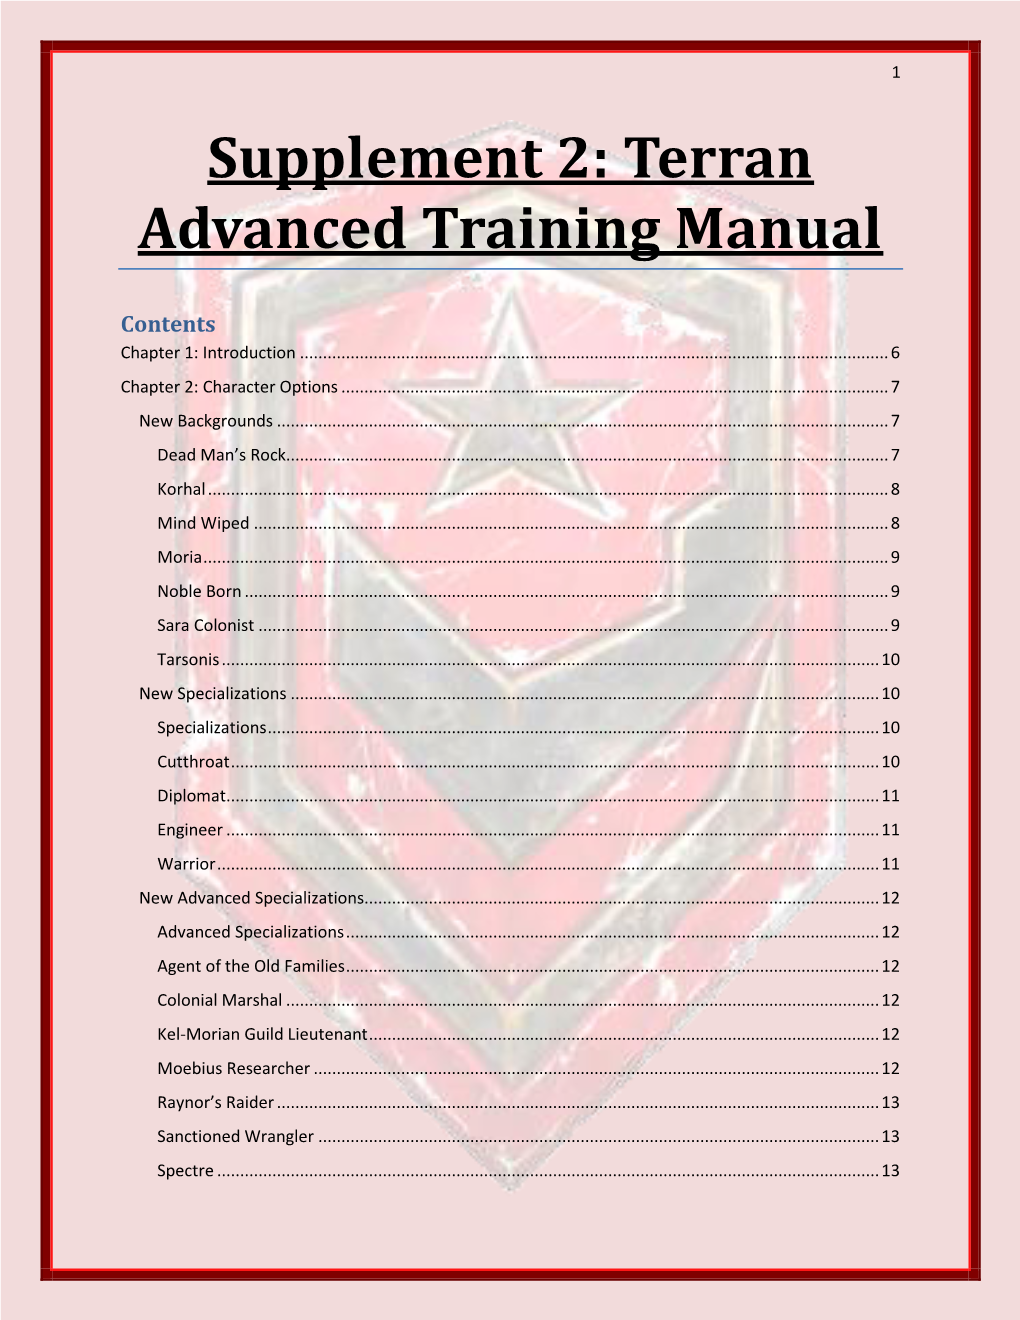 Supplement 2: Terran Advanced Training Manual